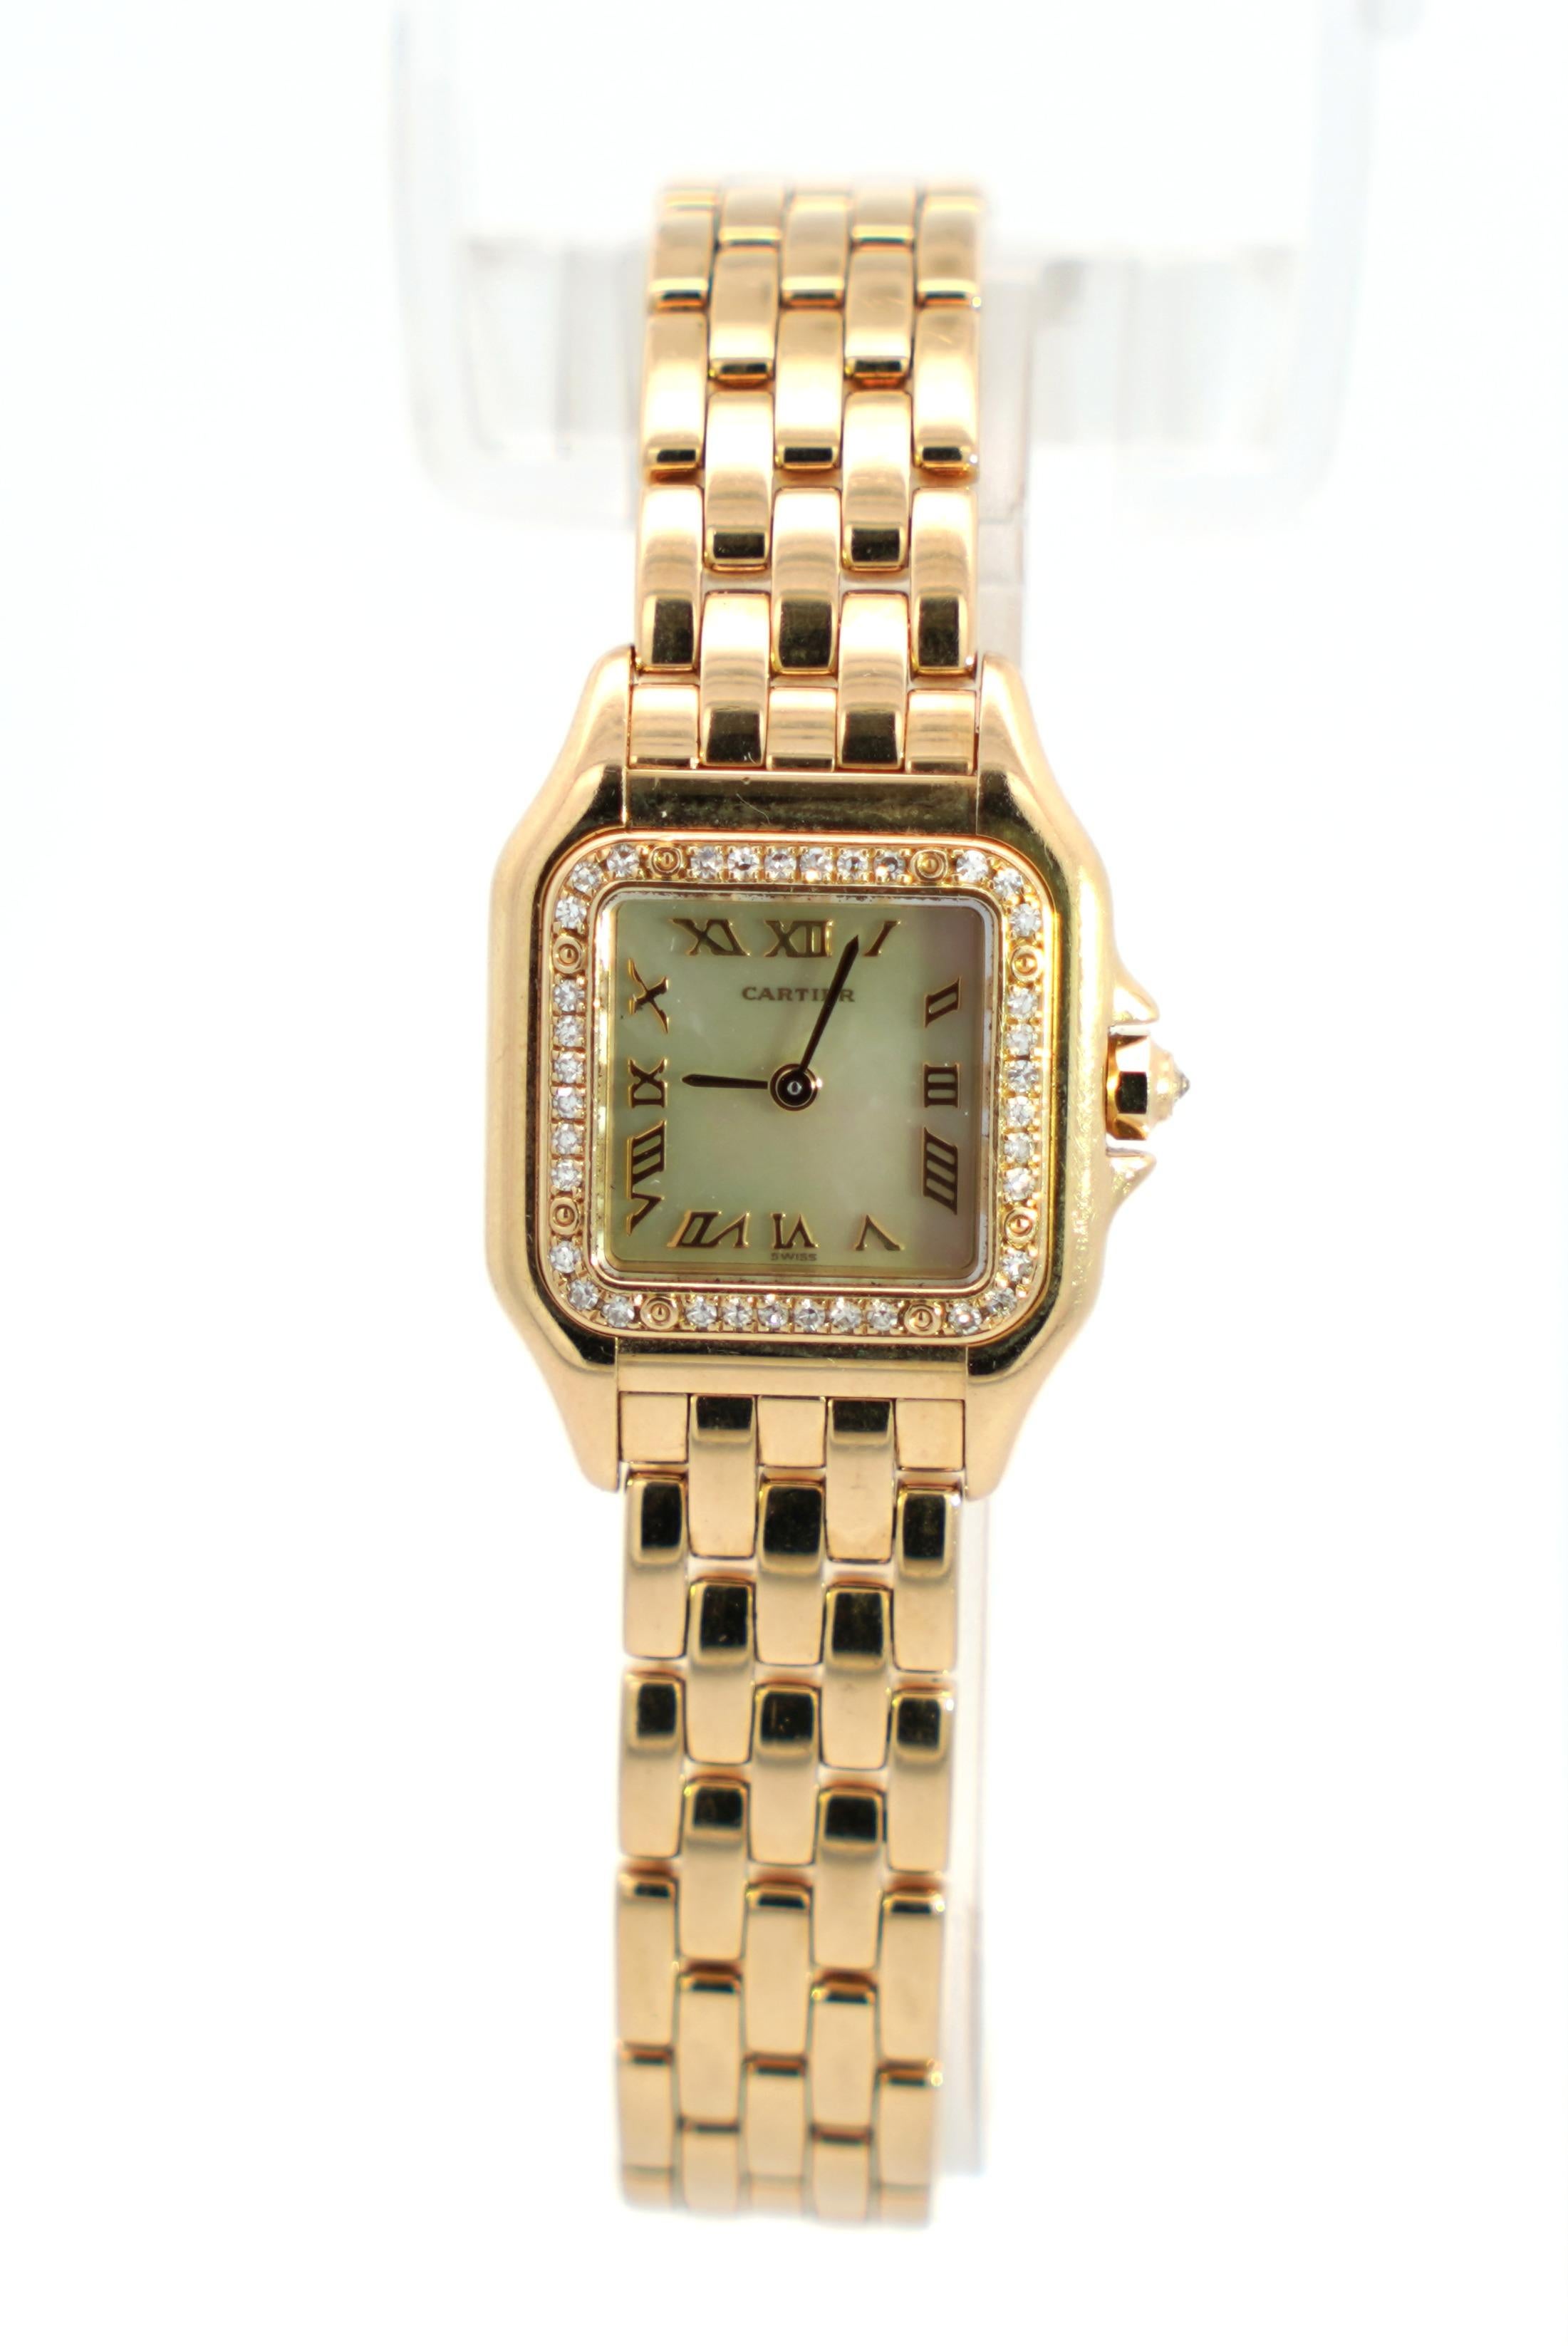 Round Cut Cartier Panthere MOP 22mm Factory Diamond Bezel Watch in 18K Yellow Gold